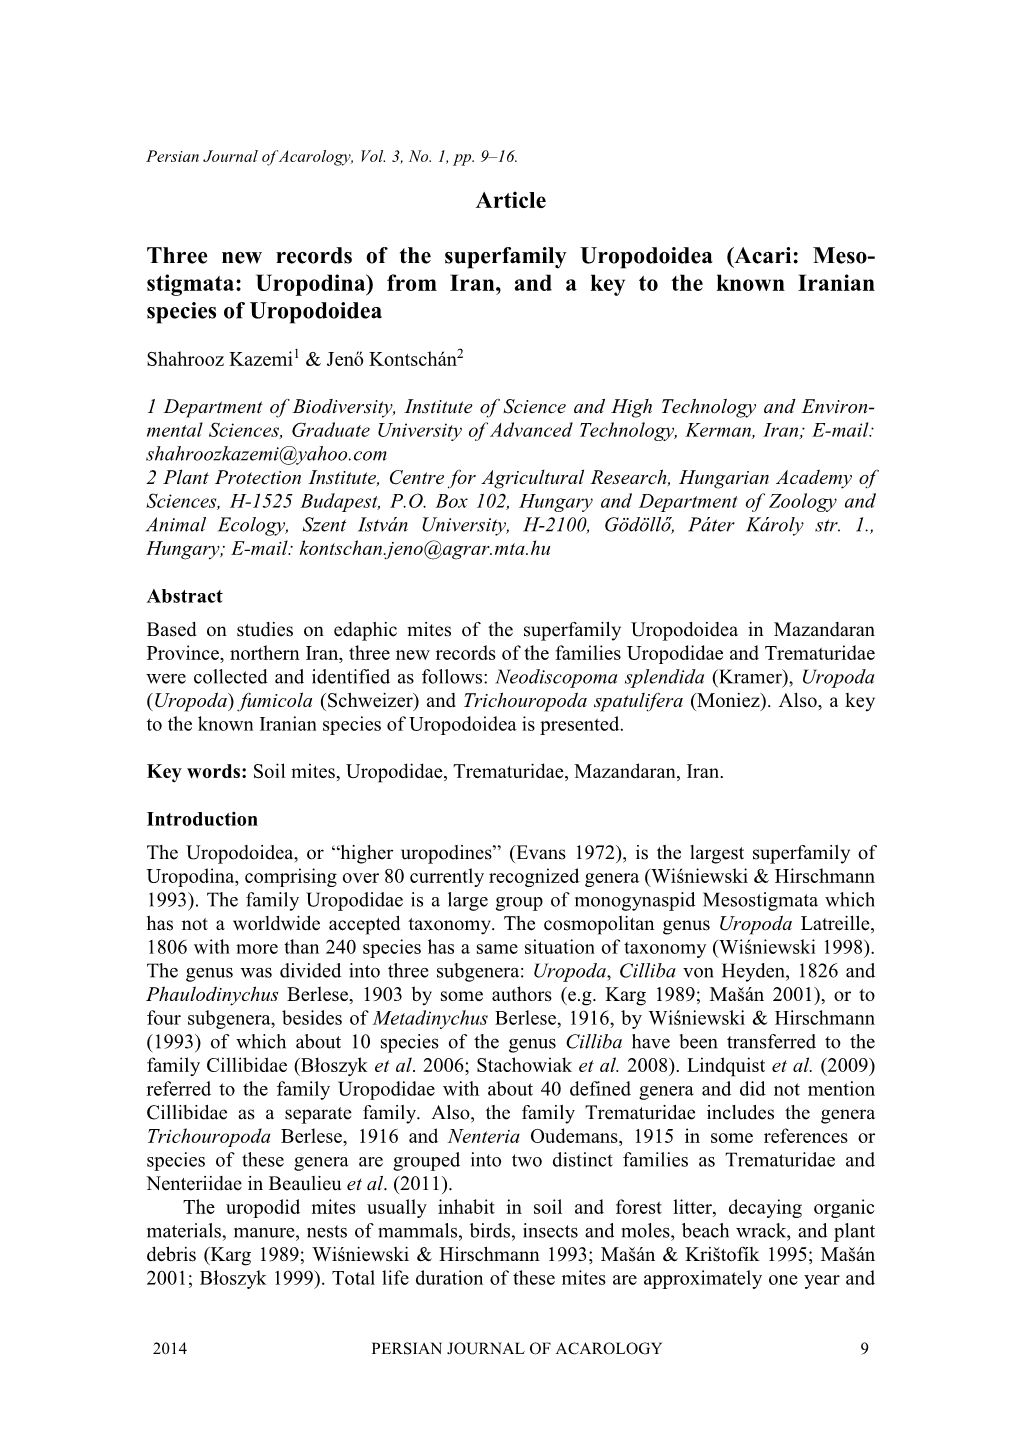 Article Three New Records of the Superfamily Uropodoidea (Acari: Meso- Stigmata: Uropodina)